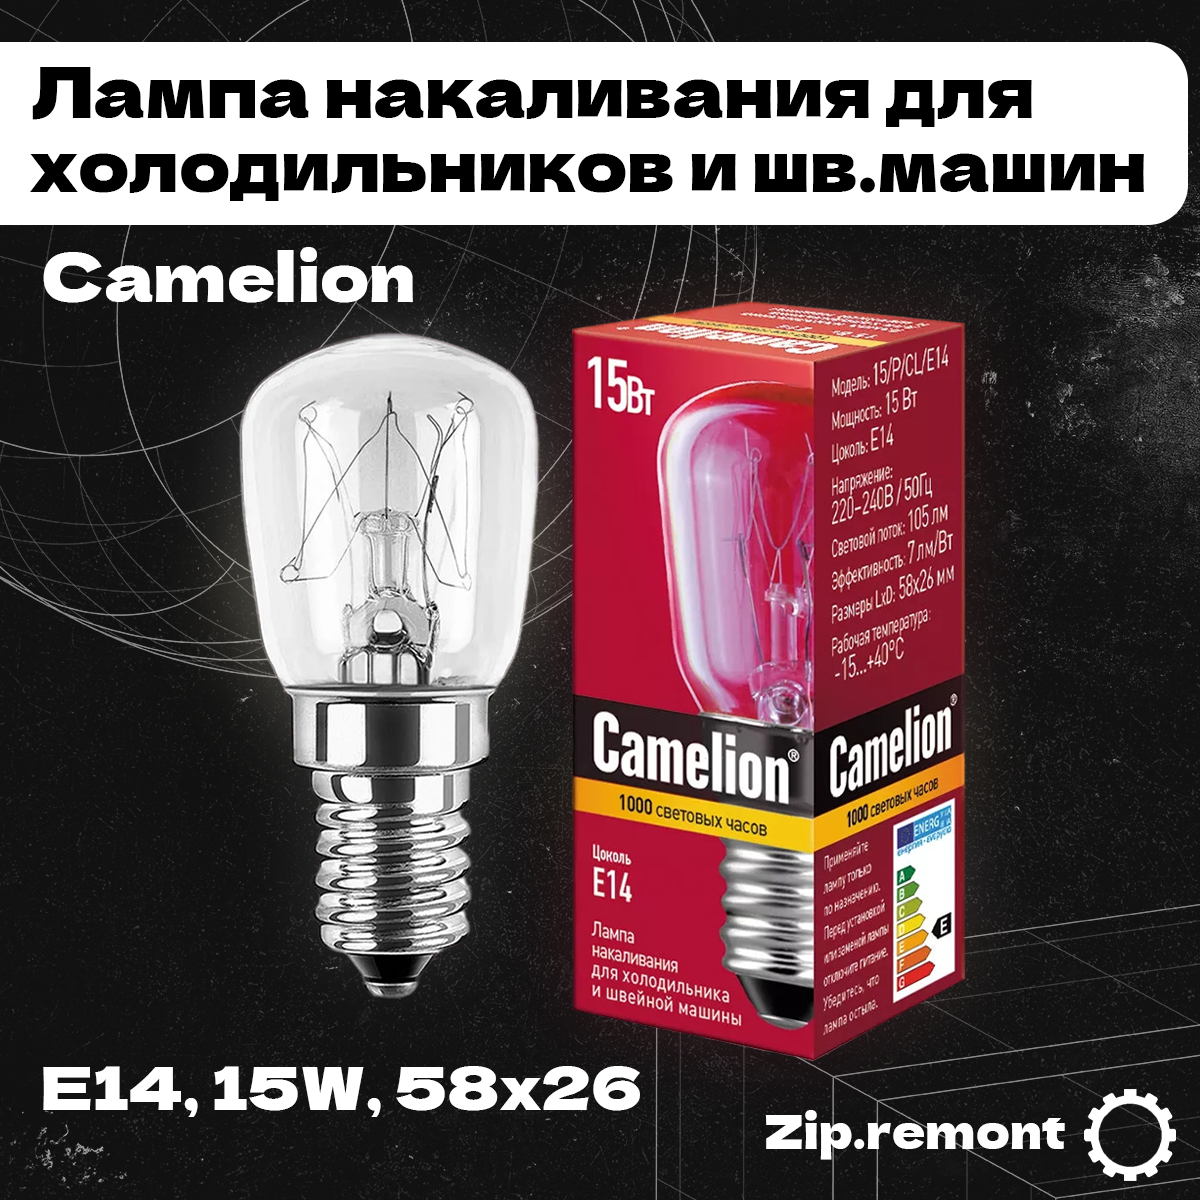 Лампа накаливания для холодильников и шв. машин Camelion, E14, 15W, 58x26, 15/P/CL/E14, (МП), 004734